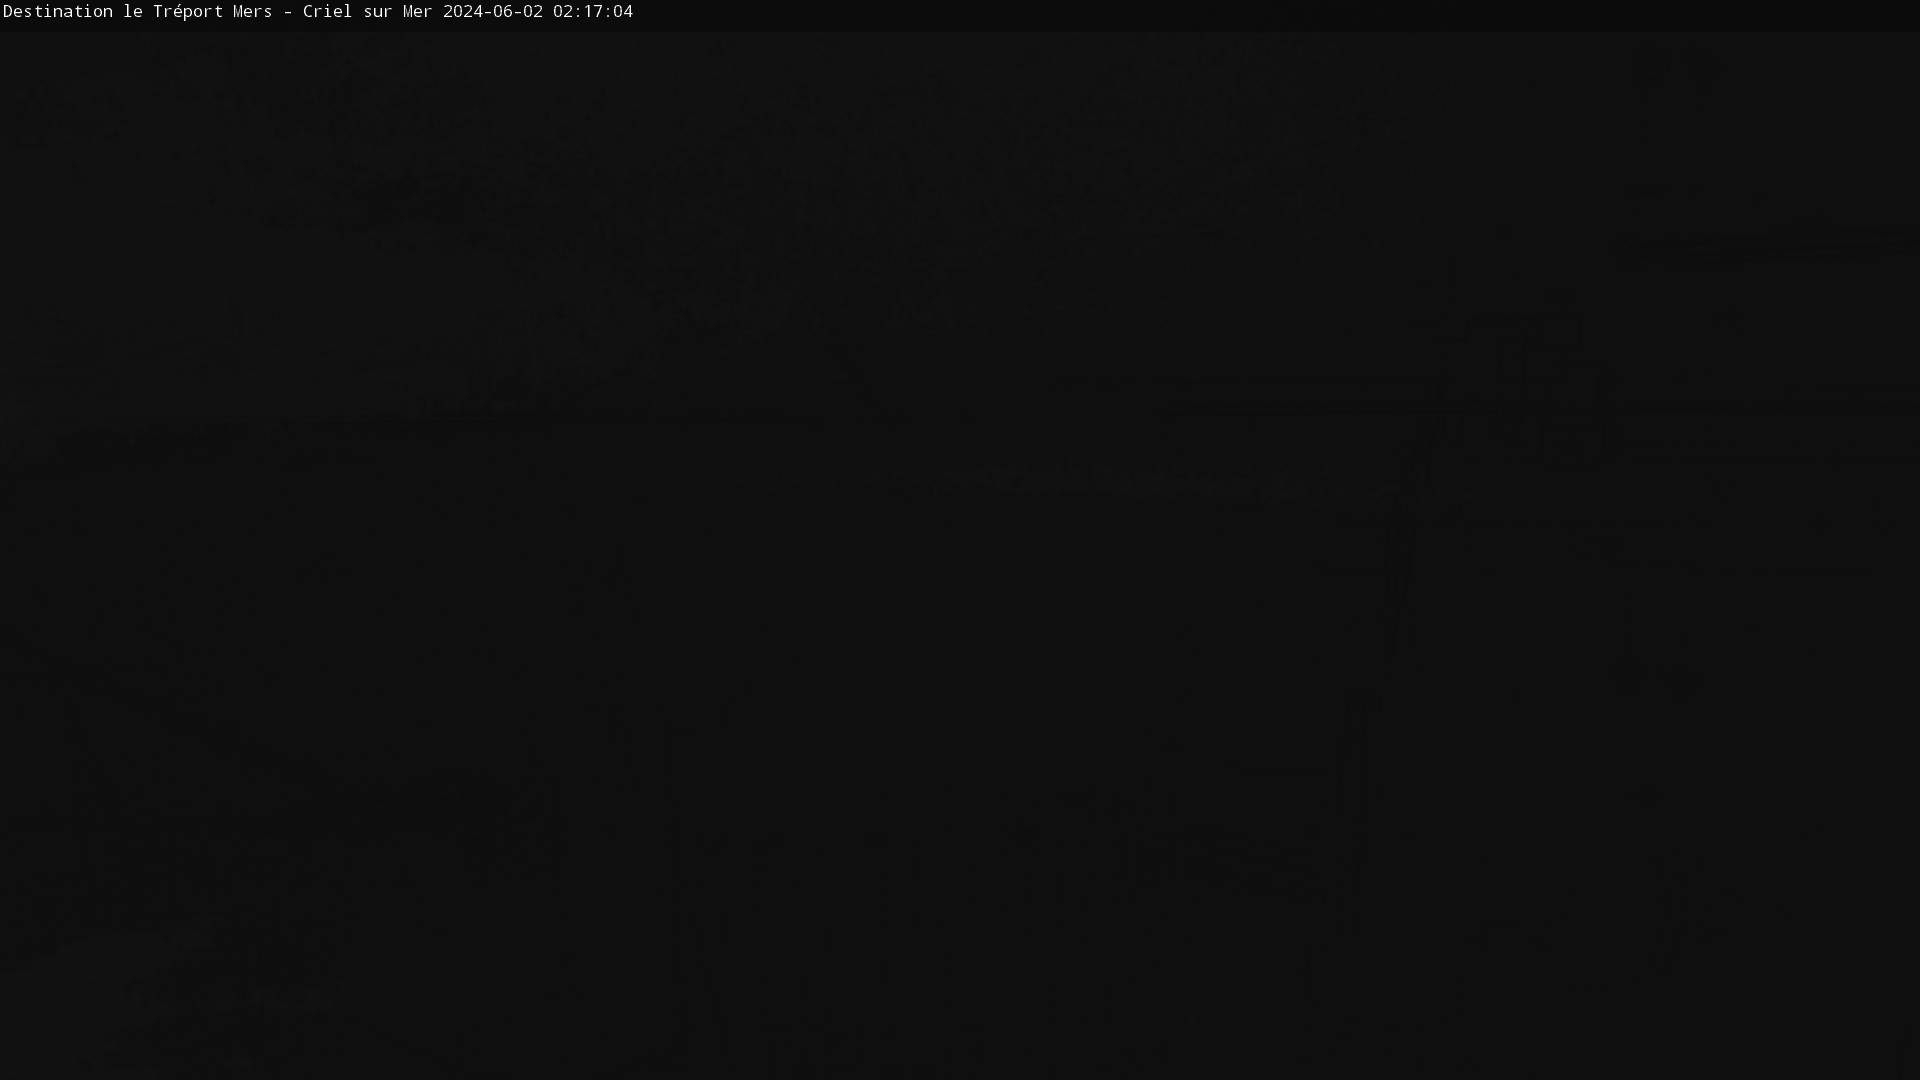 Criel-sur-Mer Mer. 02:18